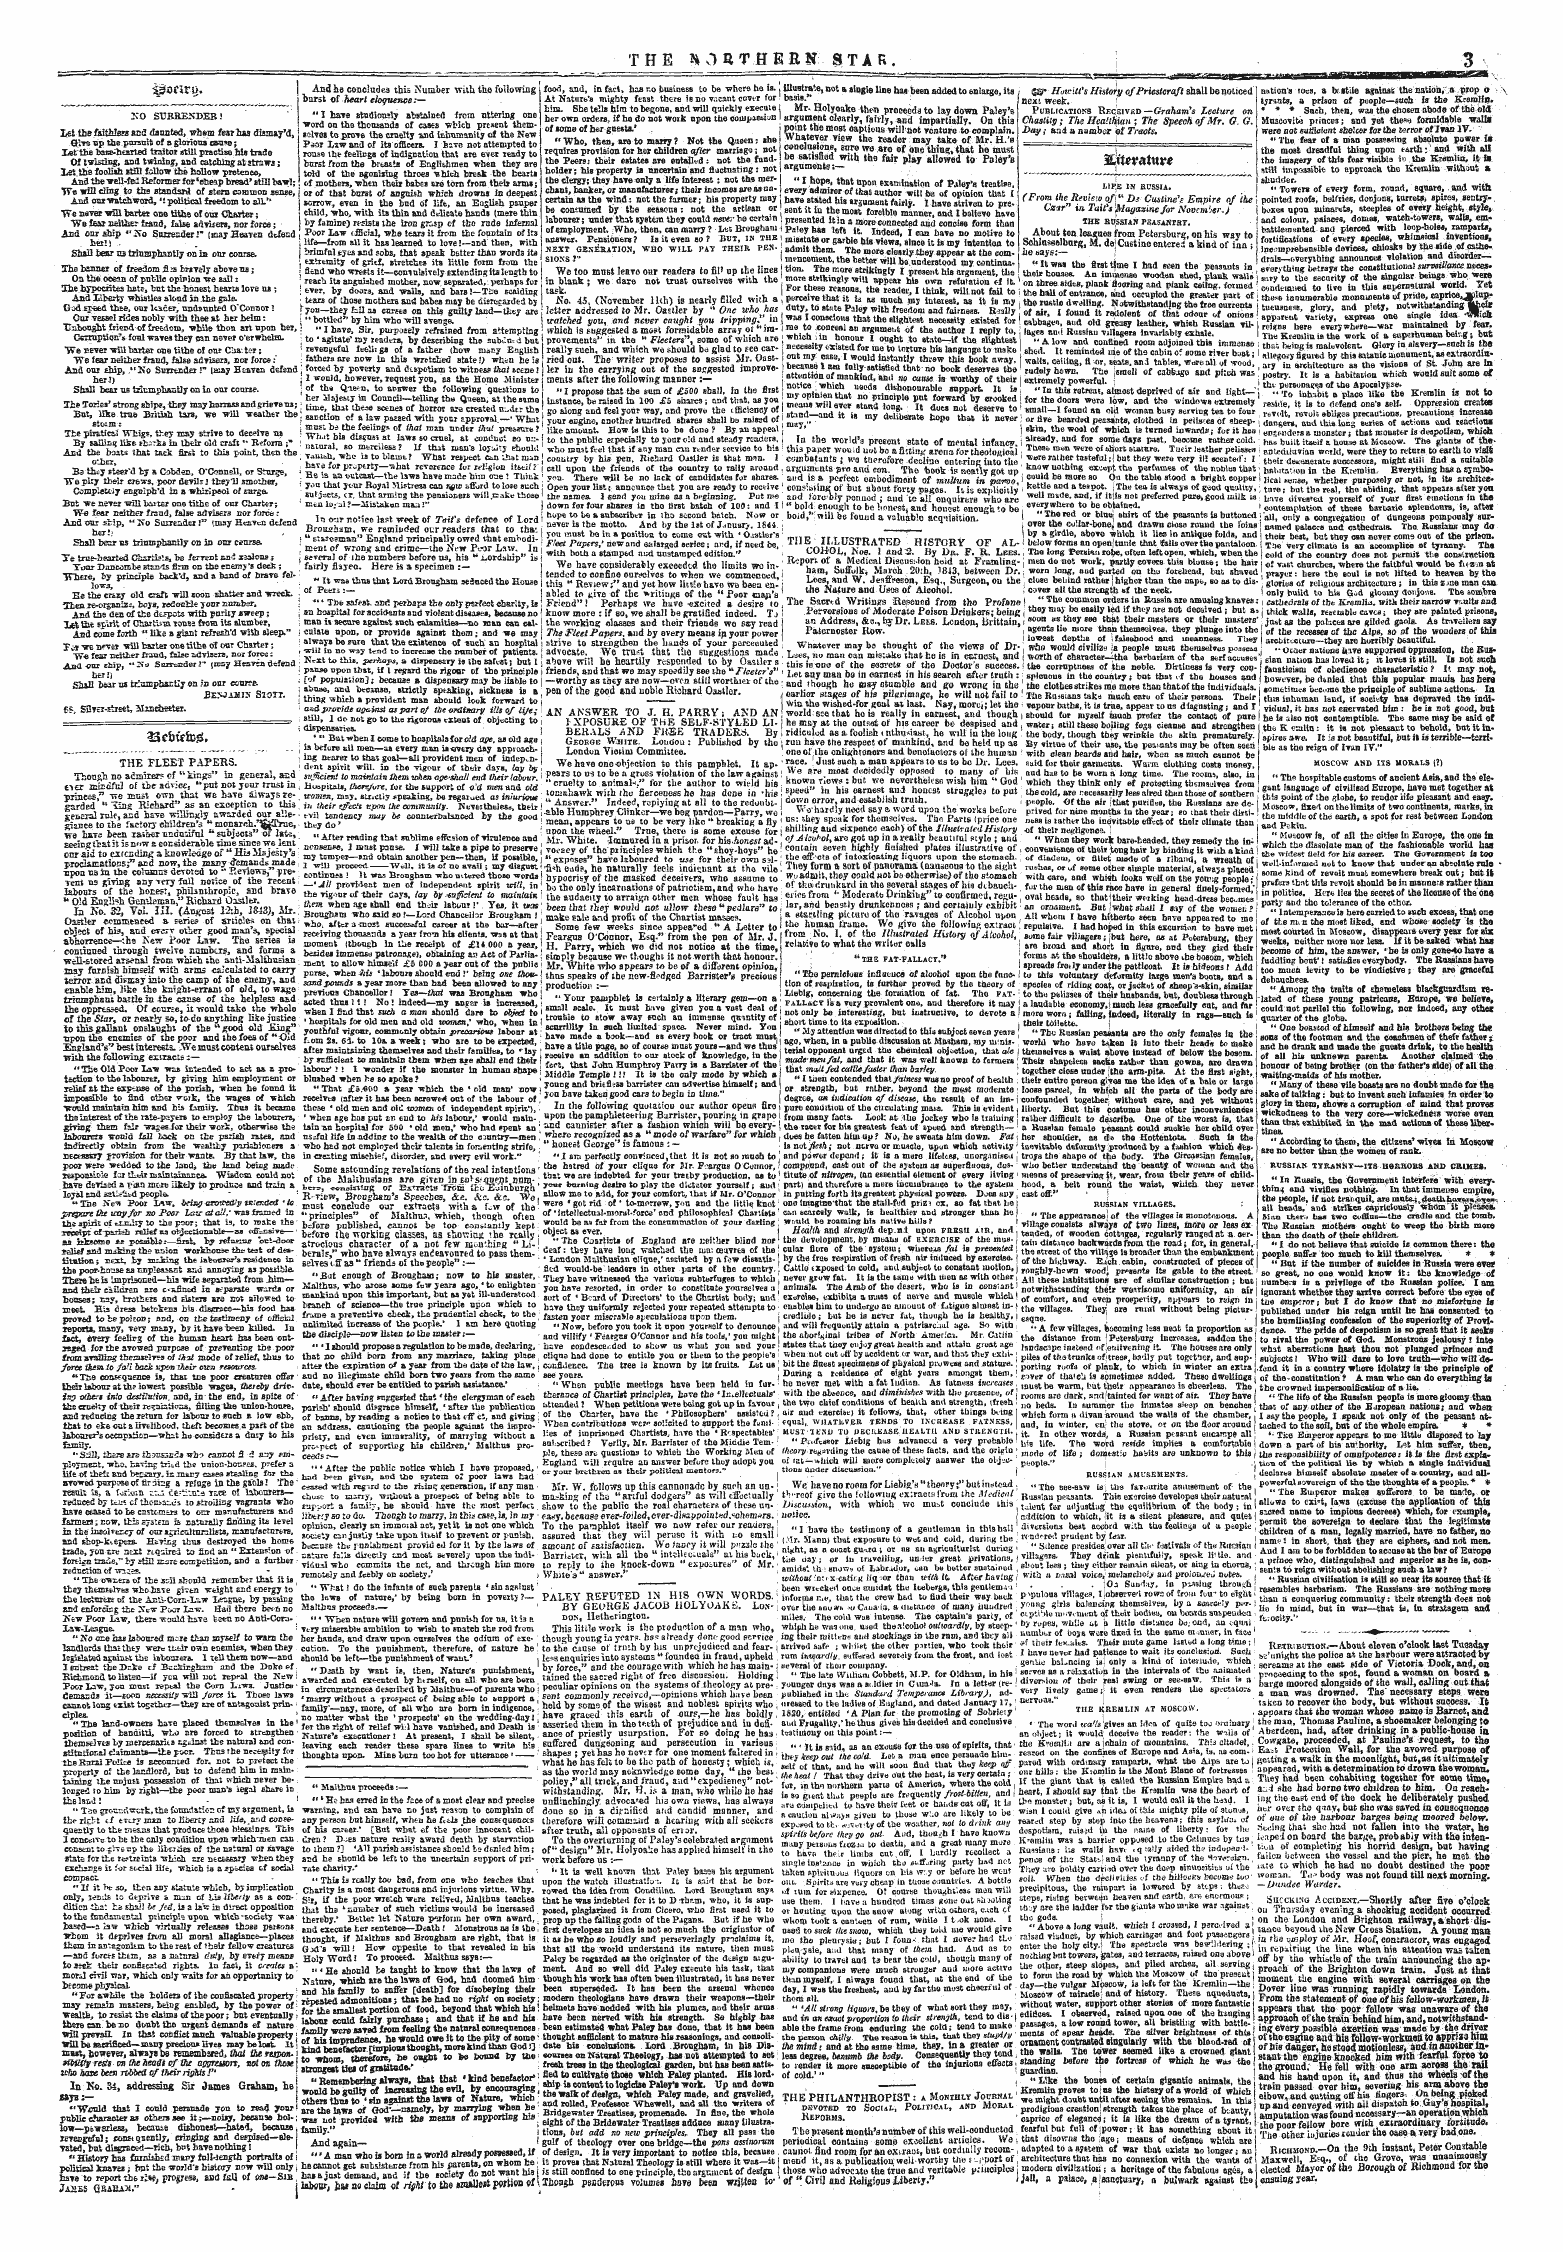 Northern Star (1837-1852): jS F Y, 4th edition: 3